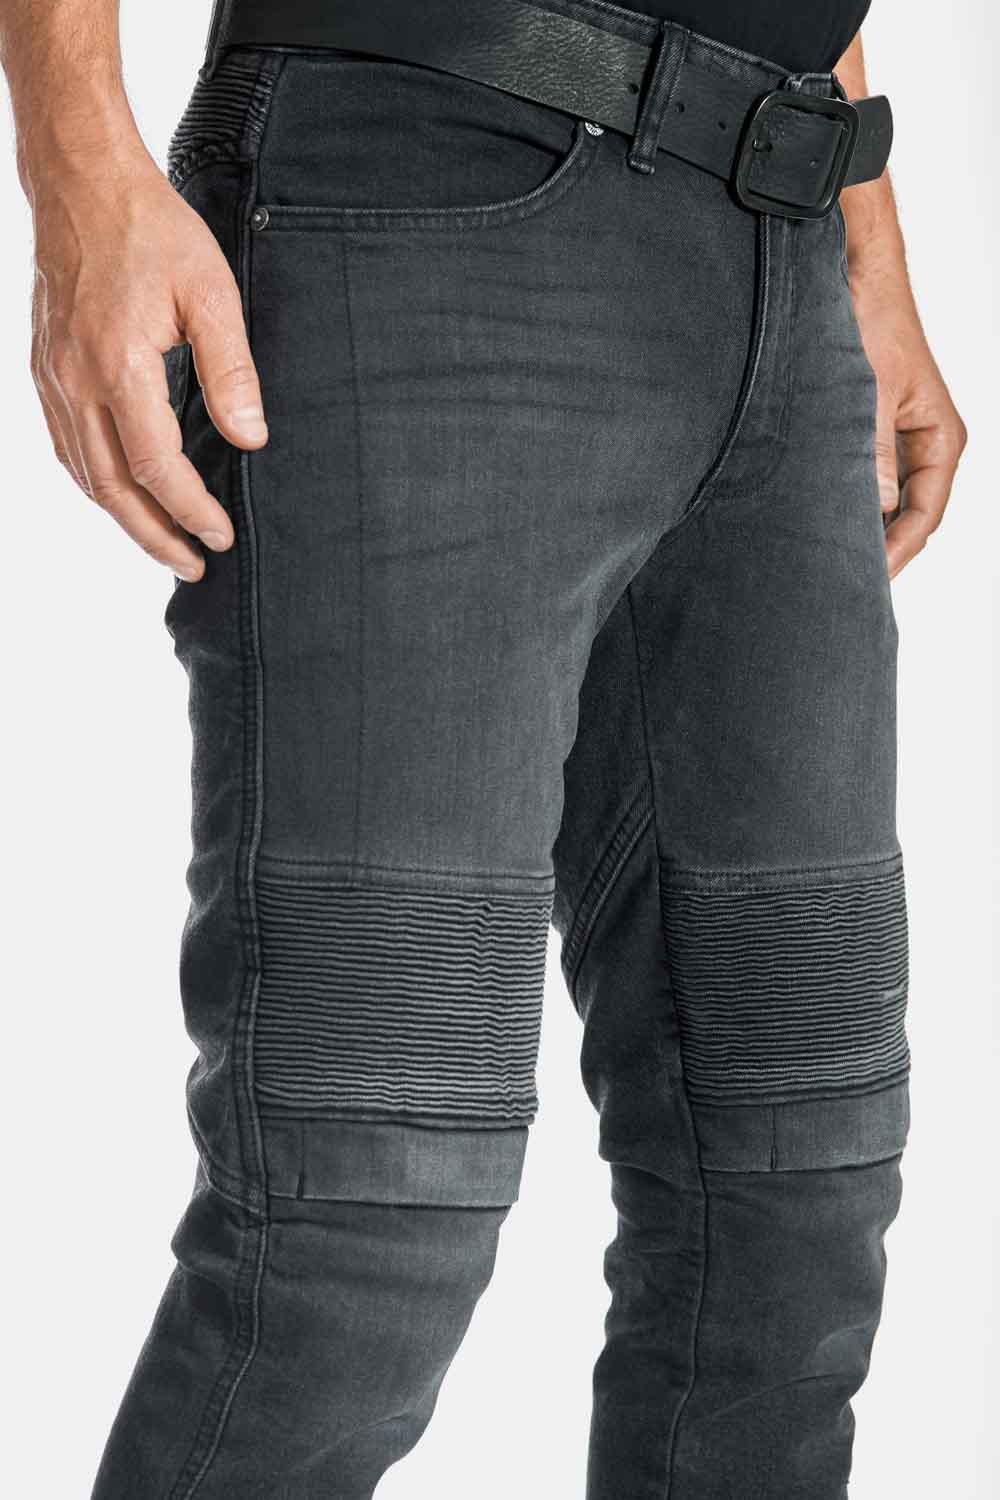 Qaswa Men/'s Motorcycle Denim Pants Motorbike Jeans with Stretch Panel Aramid Protection Lining Biker Trousers